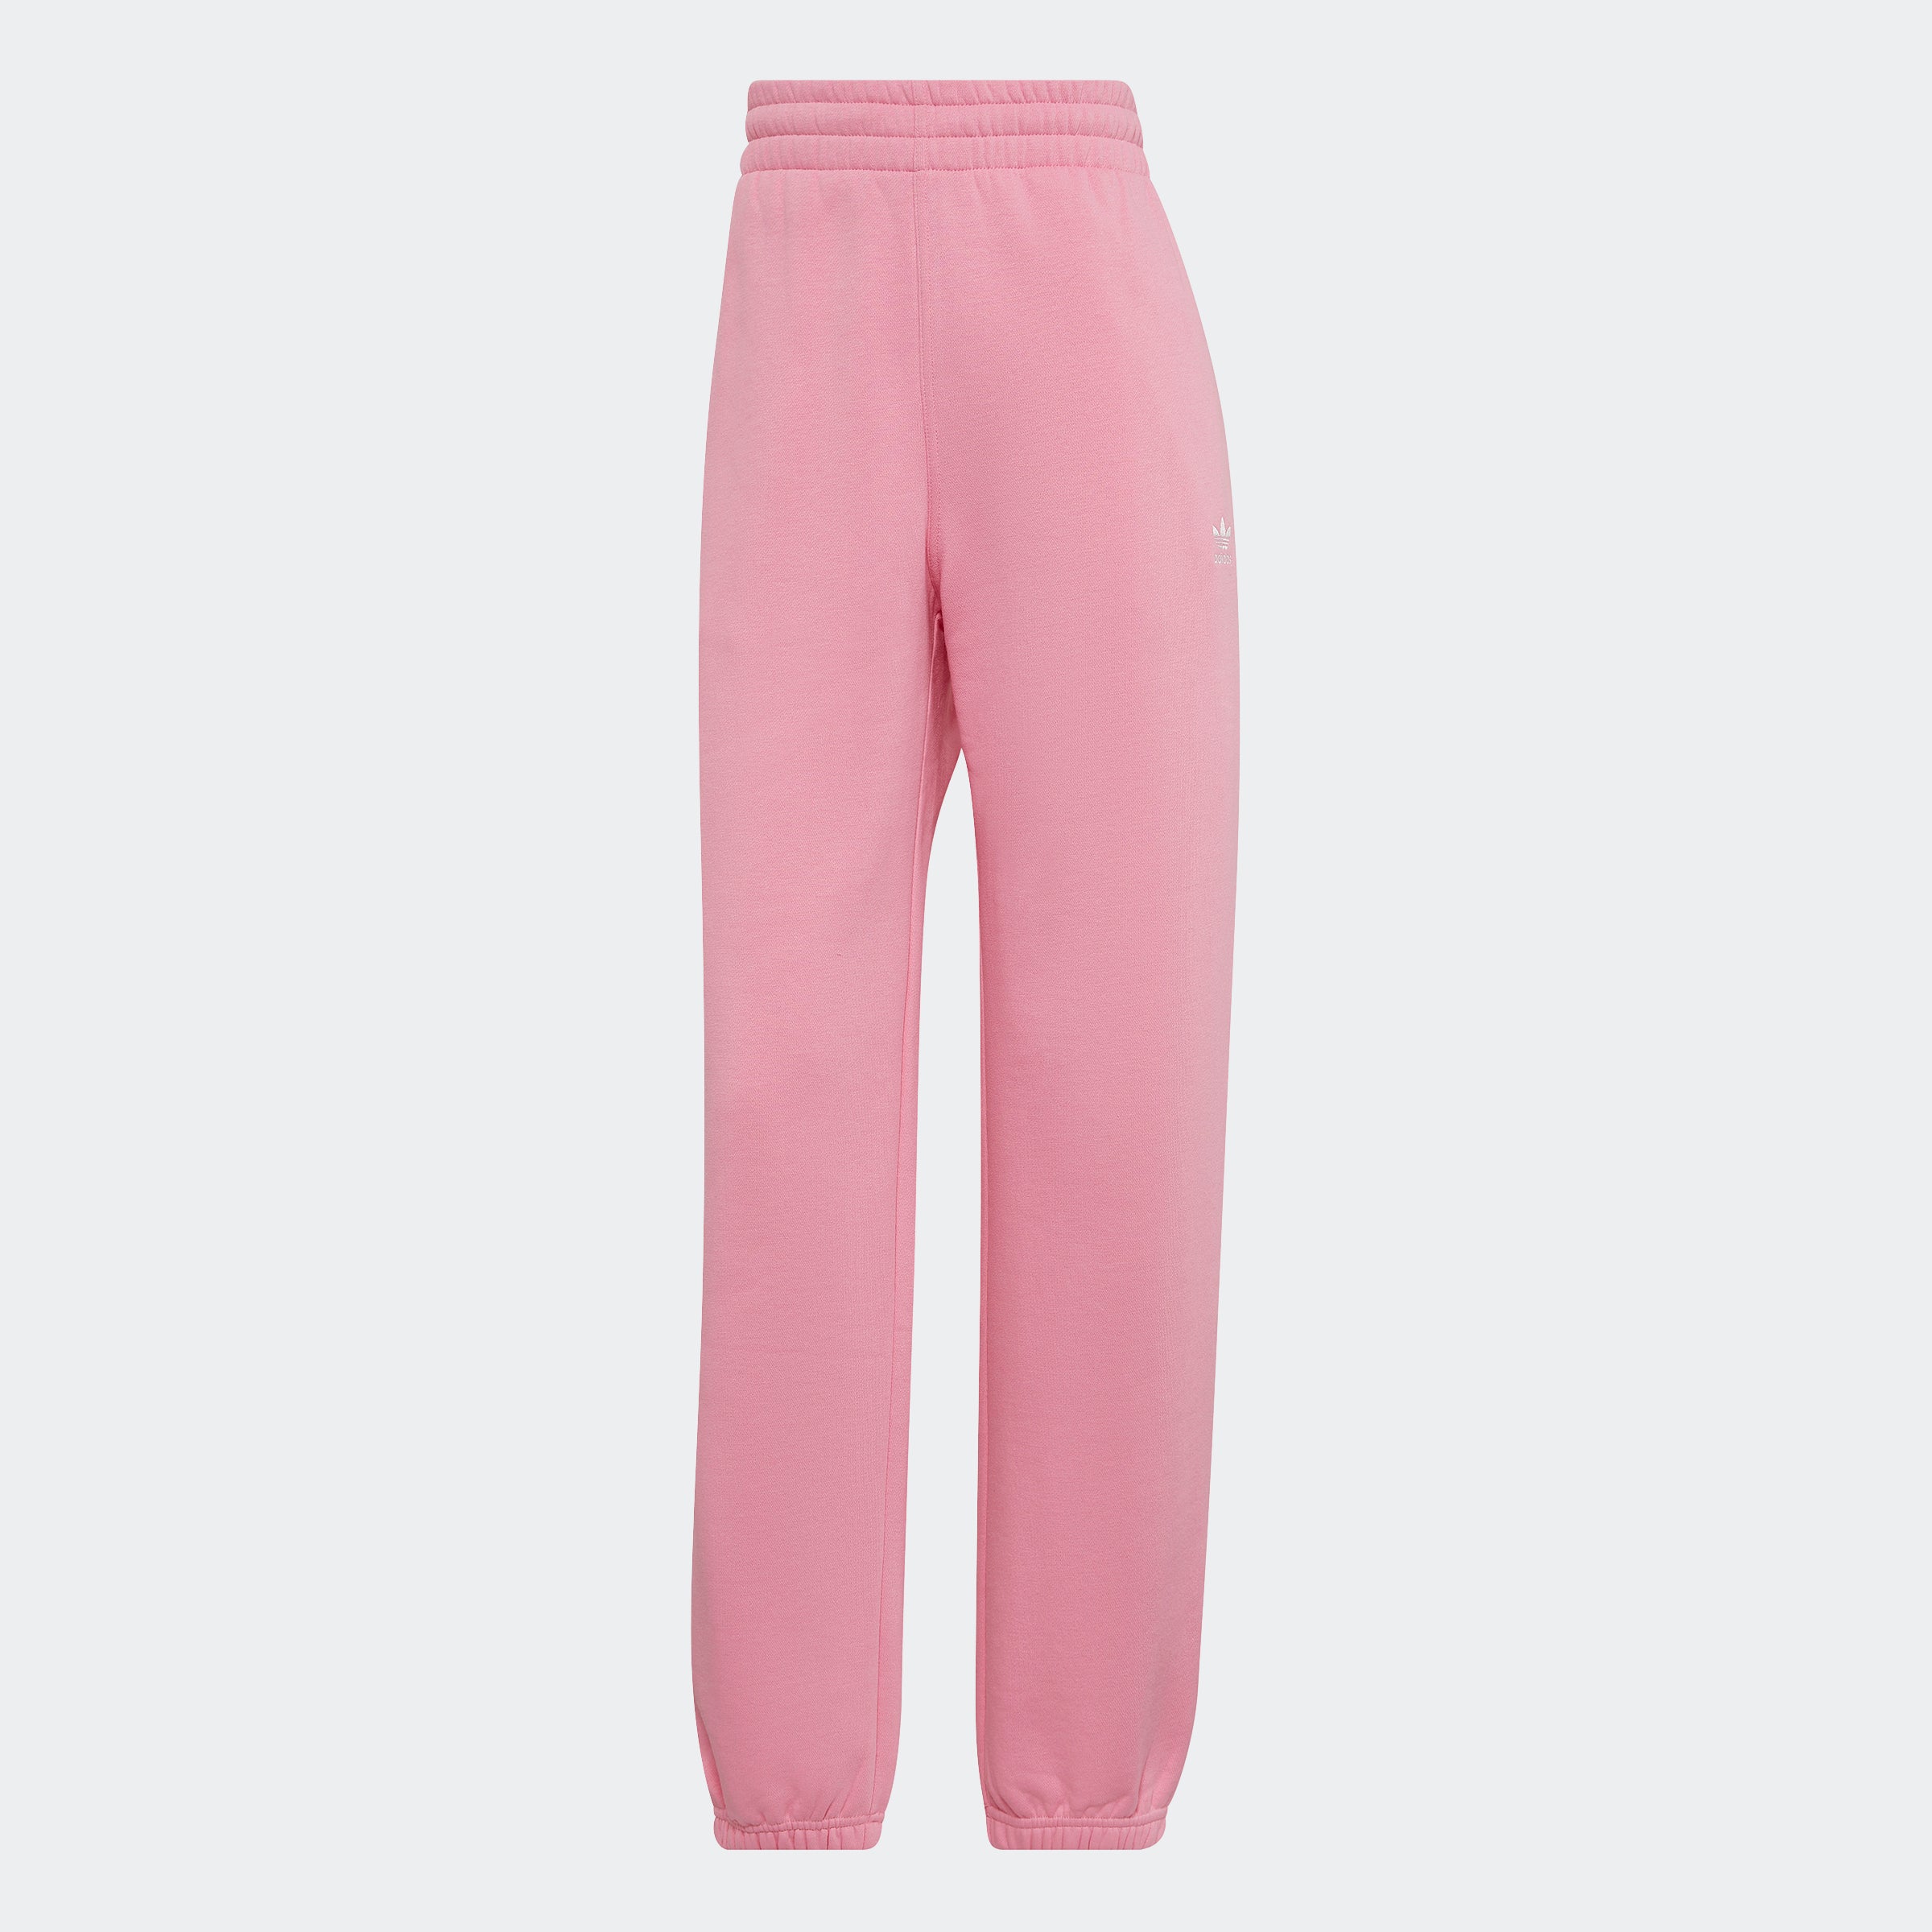 Pink, Adidas, Jogging bottoms, Womens sports clothing